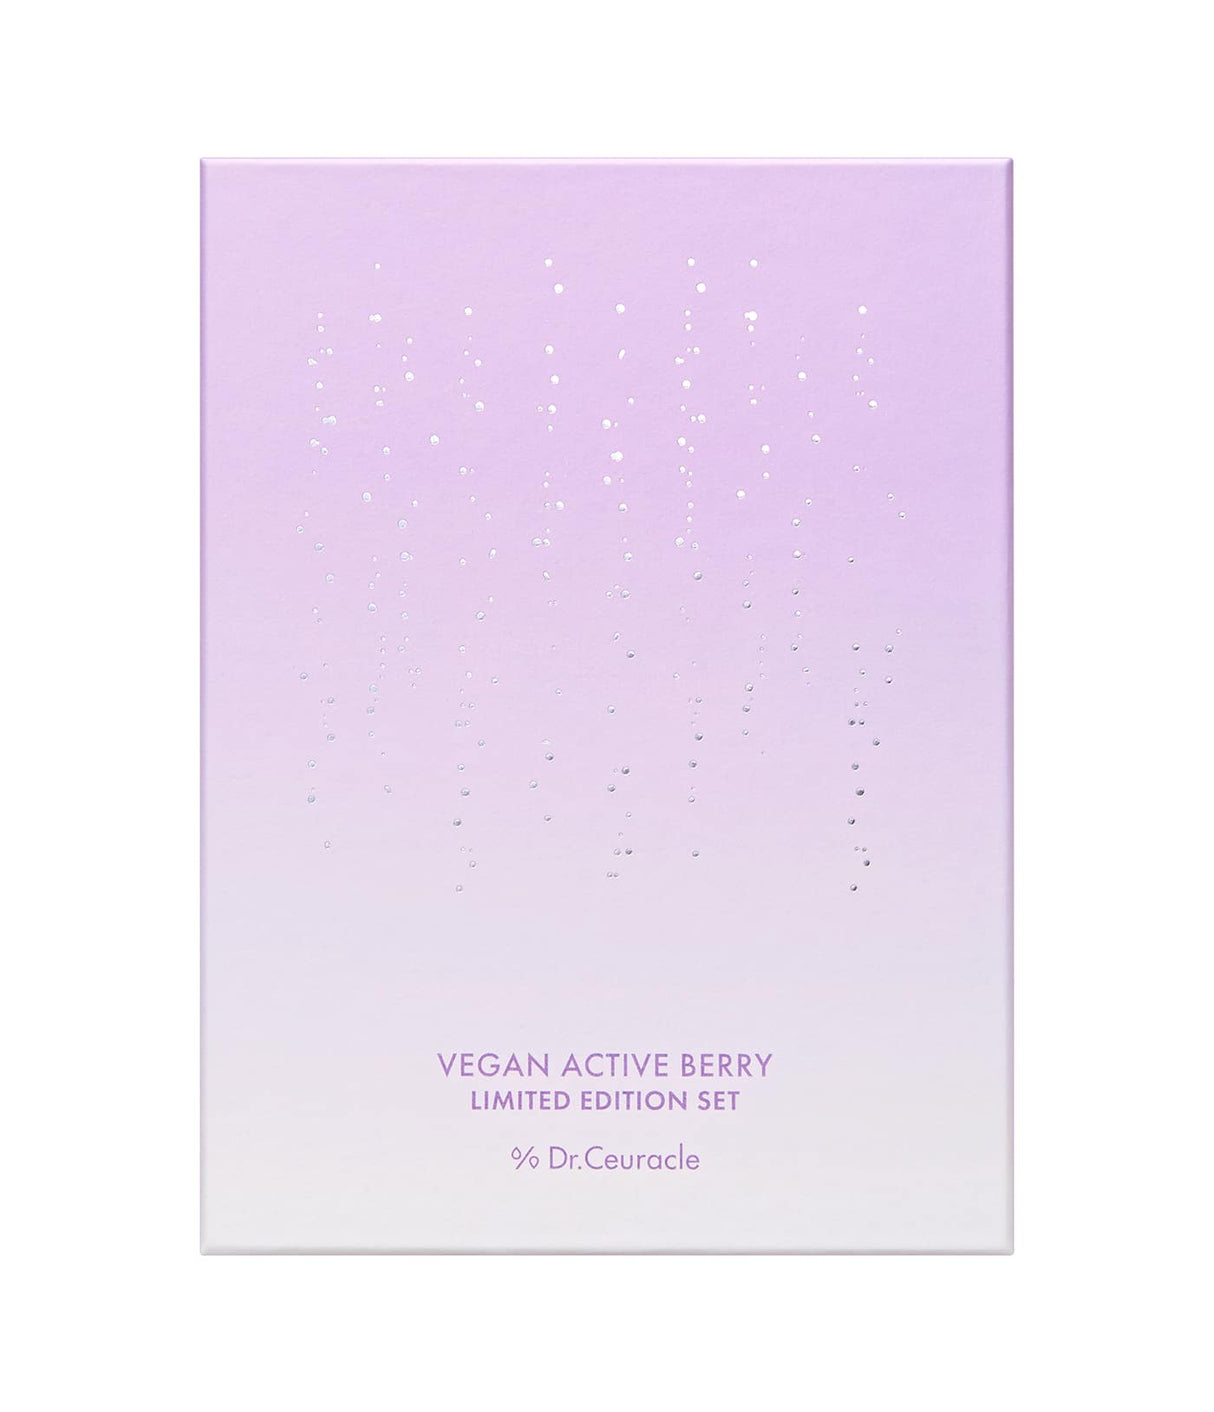 Vegan Active Berry Set de Dr. Ceuracle